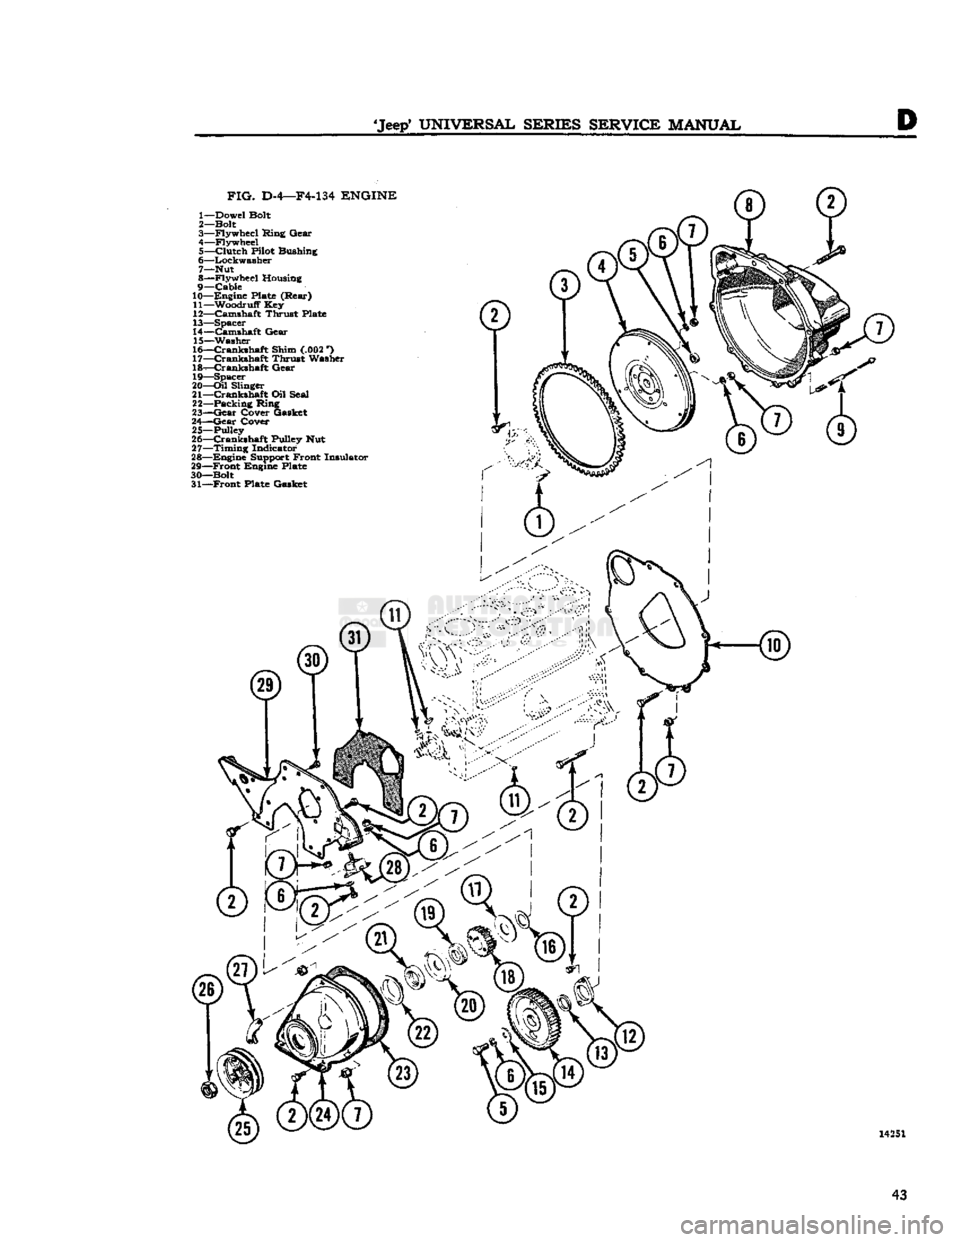 JEEP CJ 1953  Service Manual 
Jeep*
 UNIVERSAL SERIES SERVICE
 MANUAL 

FIG.
 D-4—F4-134
 ENGINE 

1— Dowel Bolt 
2— Bolt 
3— Flywheel Ring Gear 
4— Flywheel  5—
 Clutch
 Pilot Bushing 
6— Lockwasher 
7— Nut 
8�